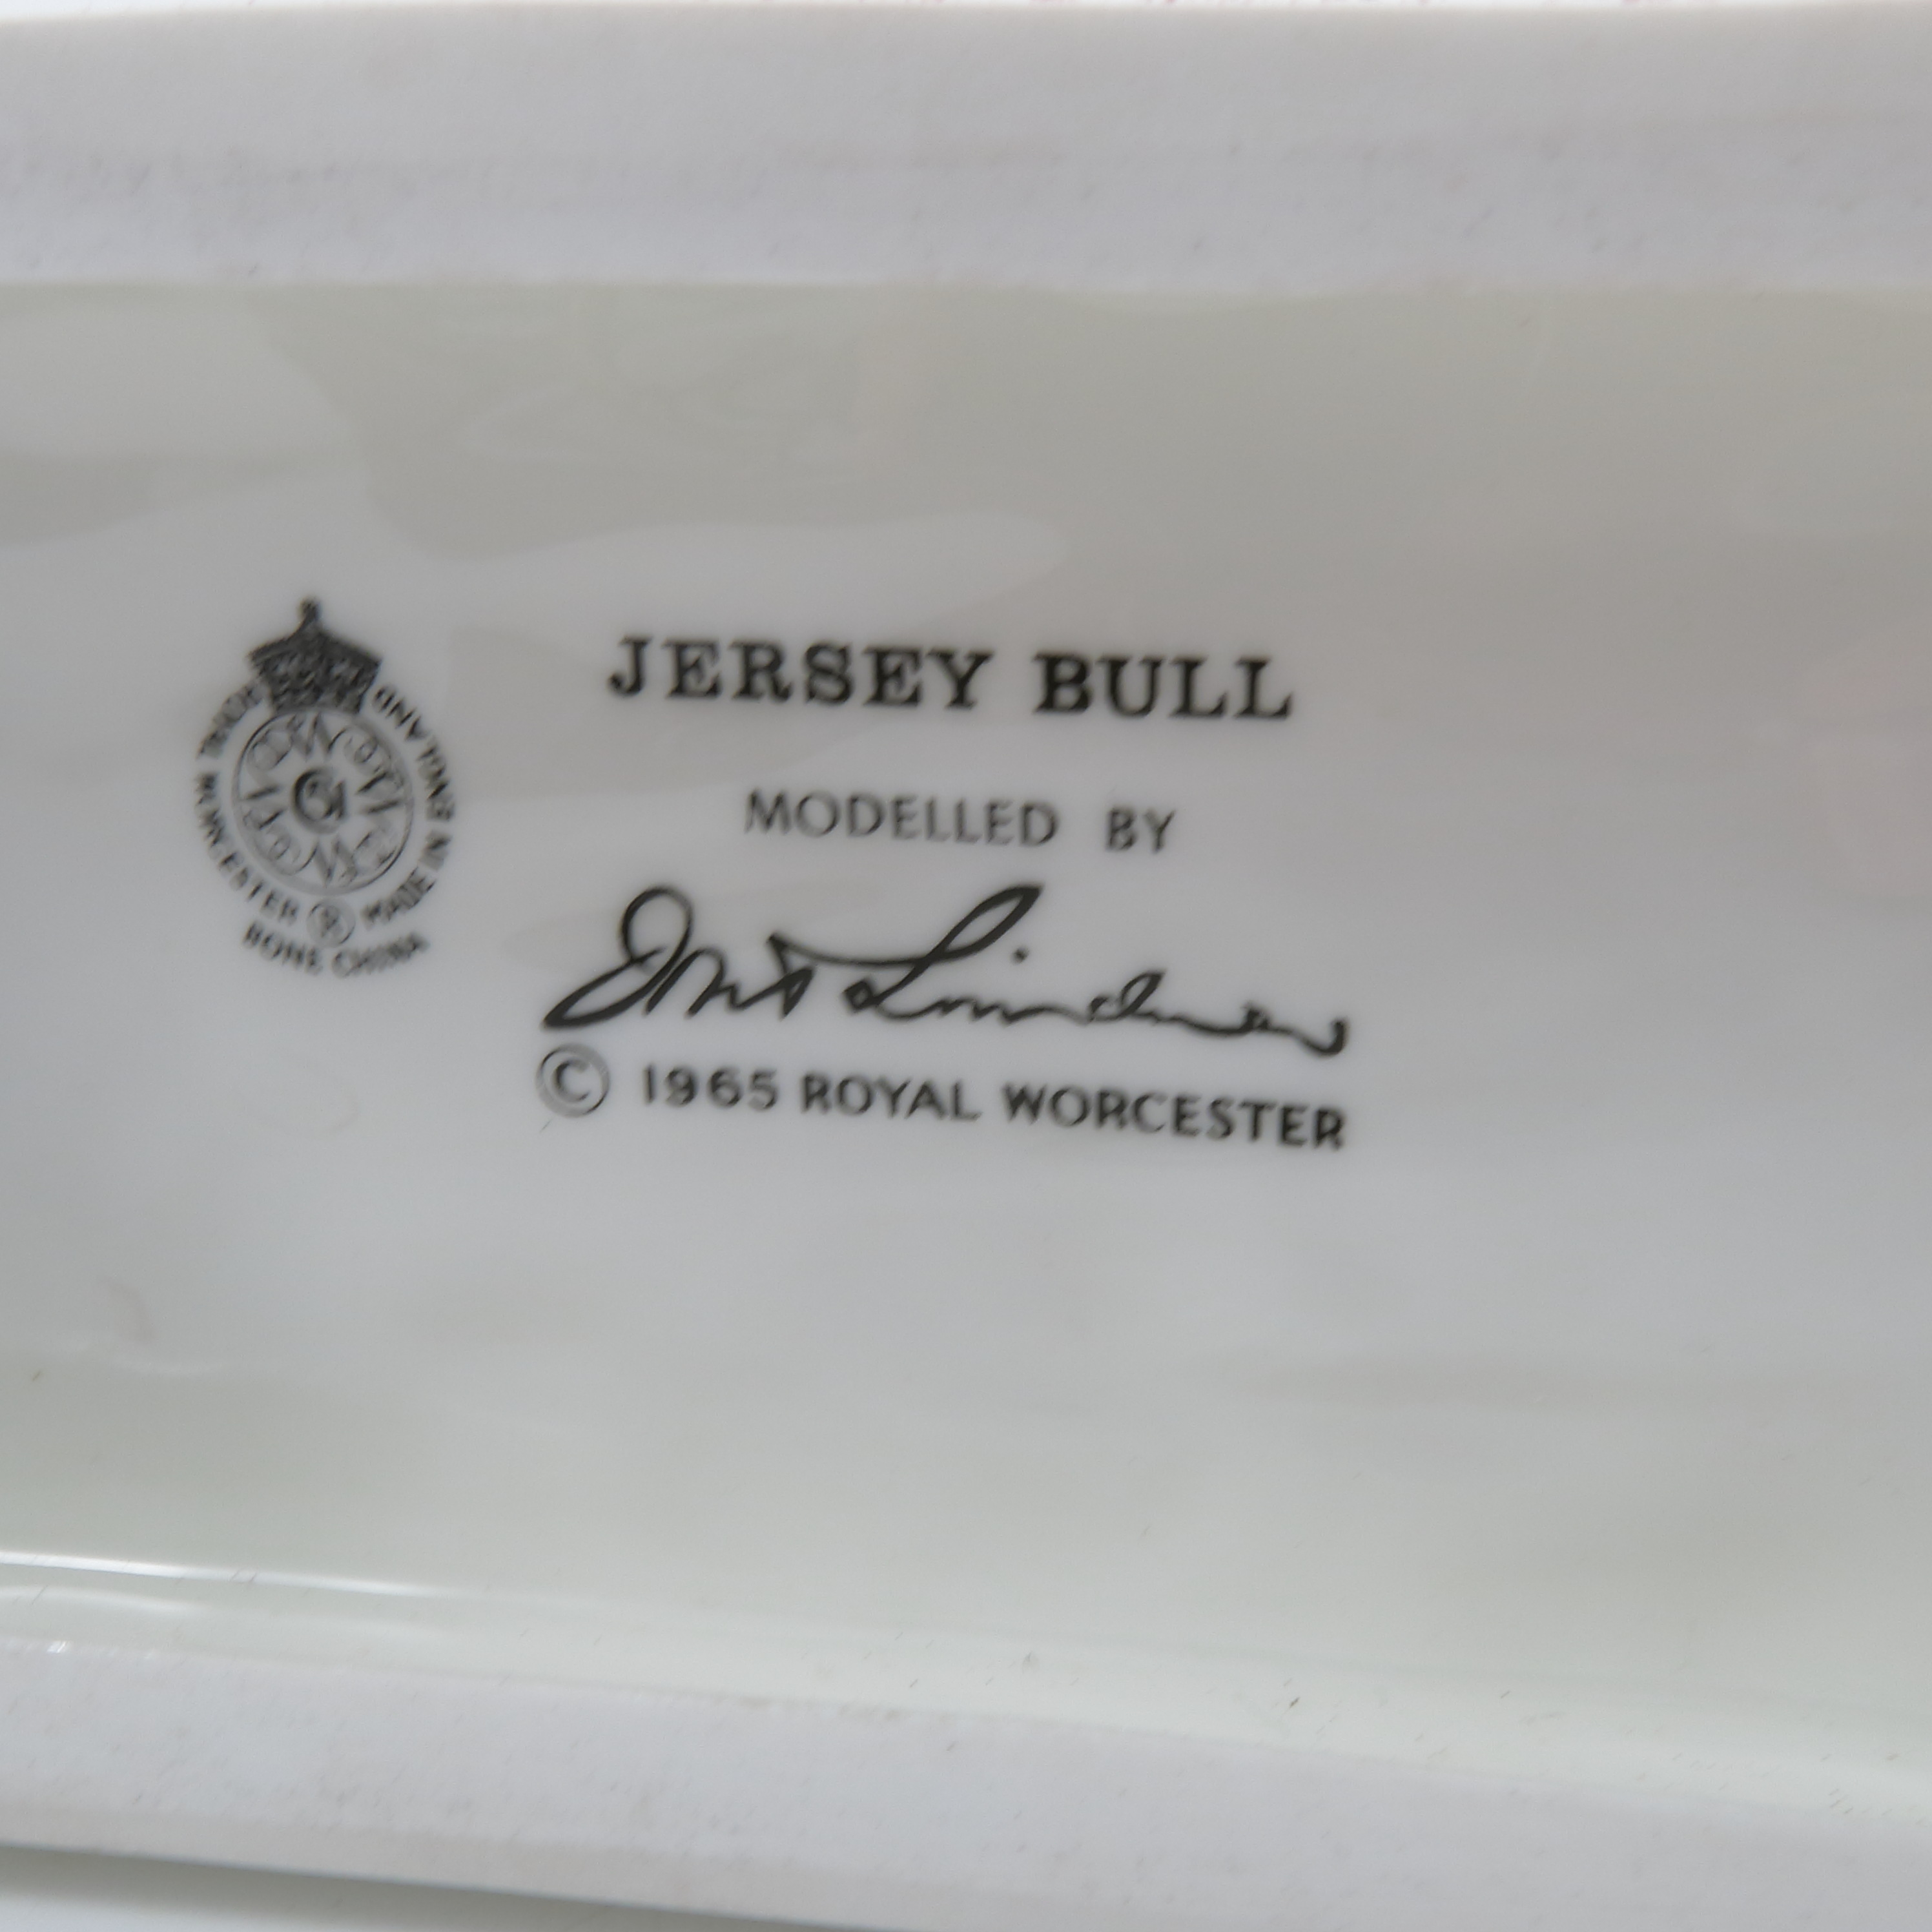 A Royal Worcester limited edition model, Jersey Bull, modelled by Doris Lindner, - Image 2 of 5